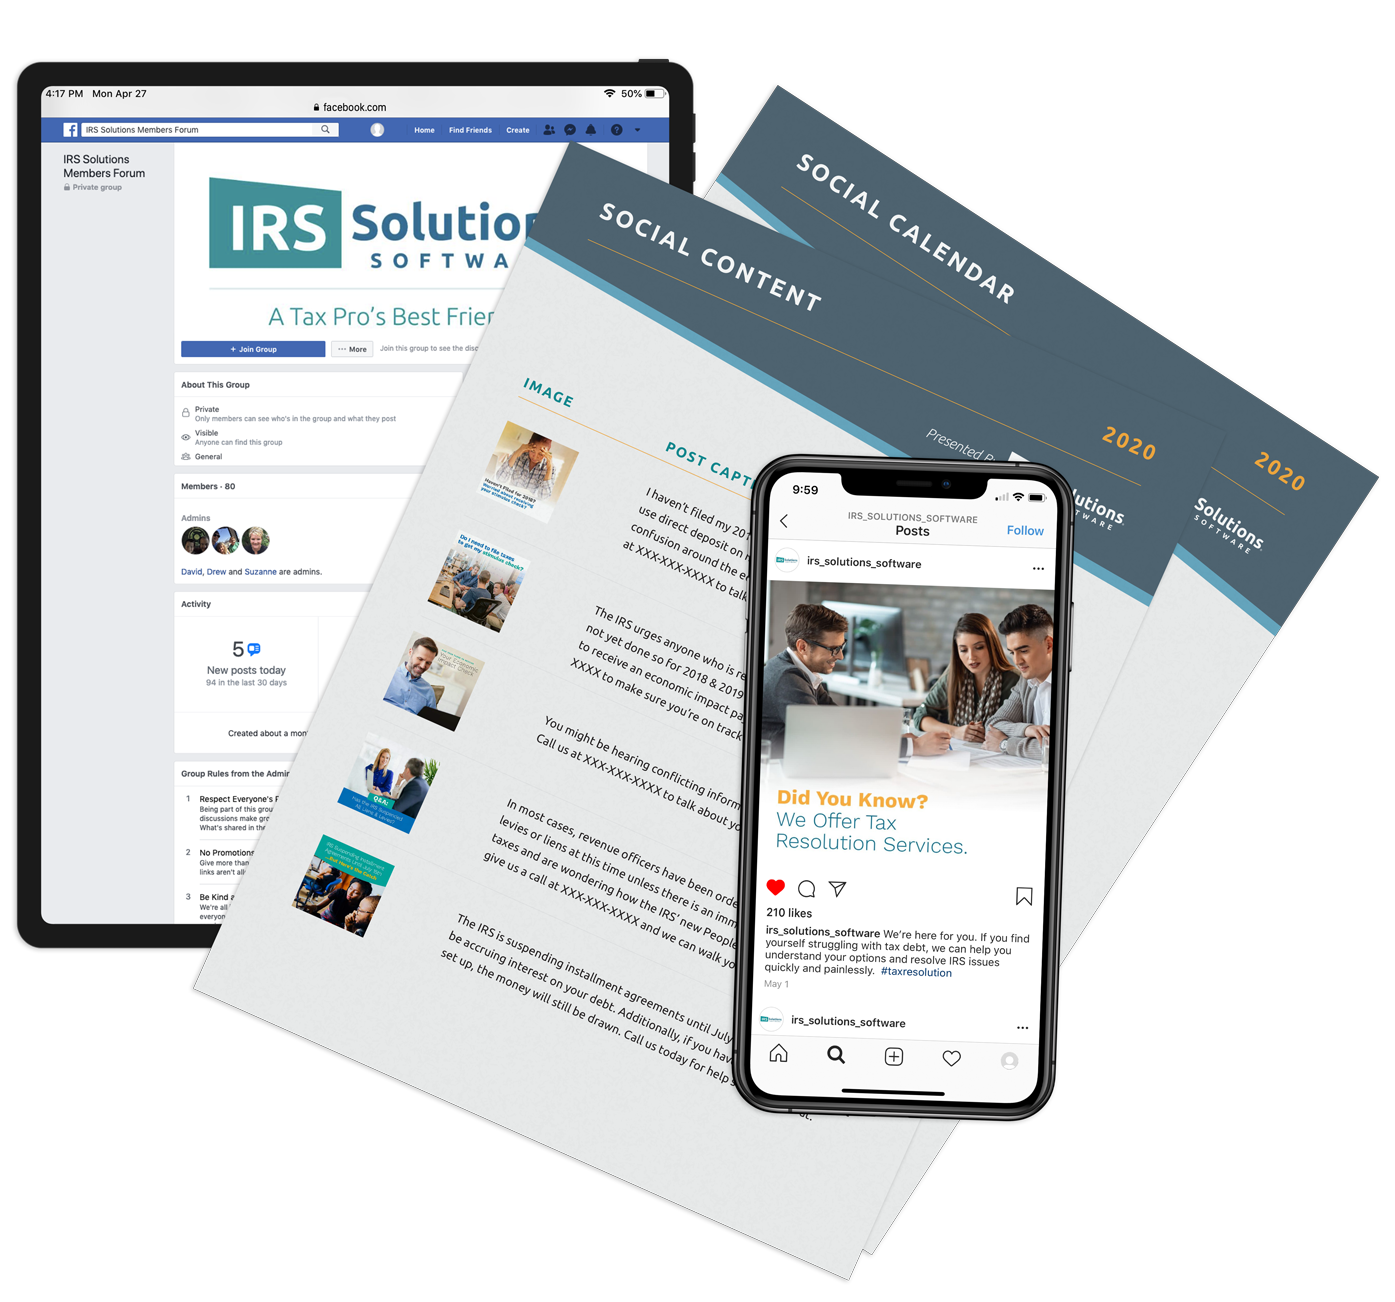 IRSS-Marketing-Toolbox-Materials-Slider-Image-2-1